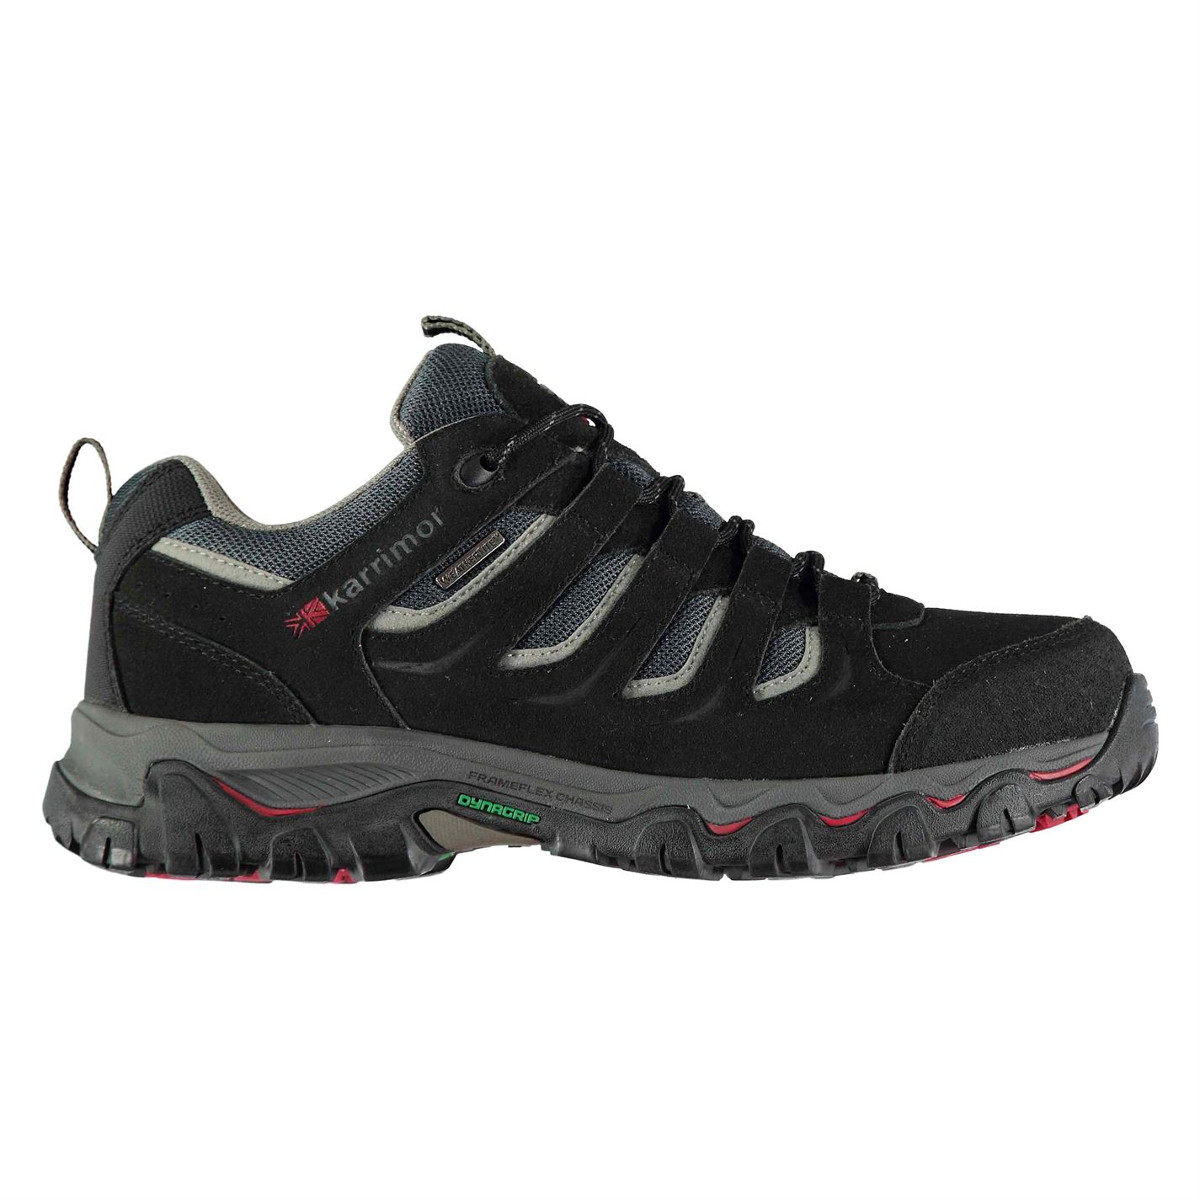 Karrimor Men's Mount Low Waterproof Hiking Shoes - Black, 16